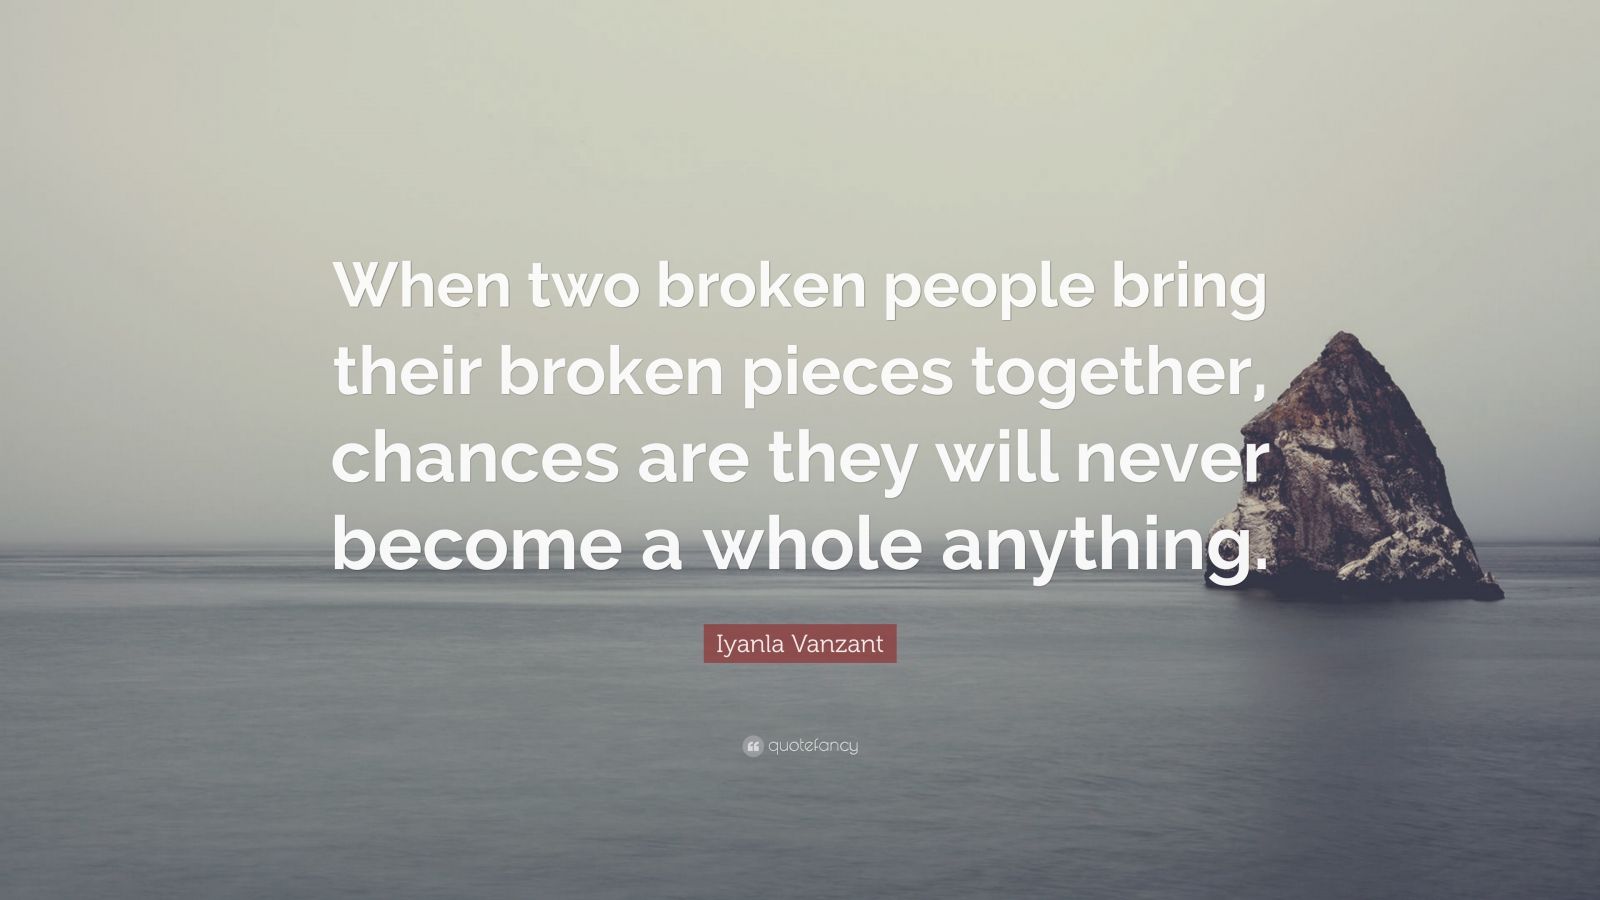 2267942 Iyanla Vanzant Quote When two broken people bring their broken